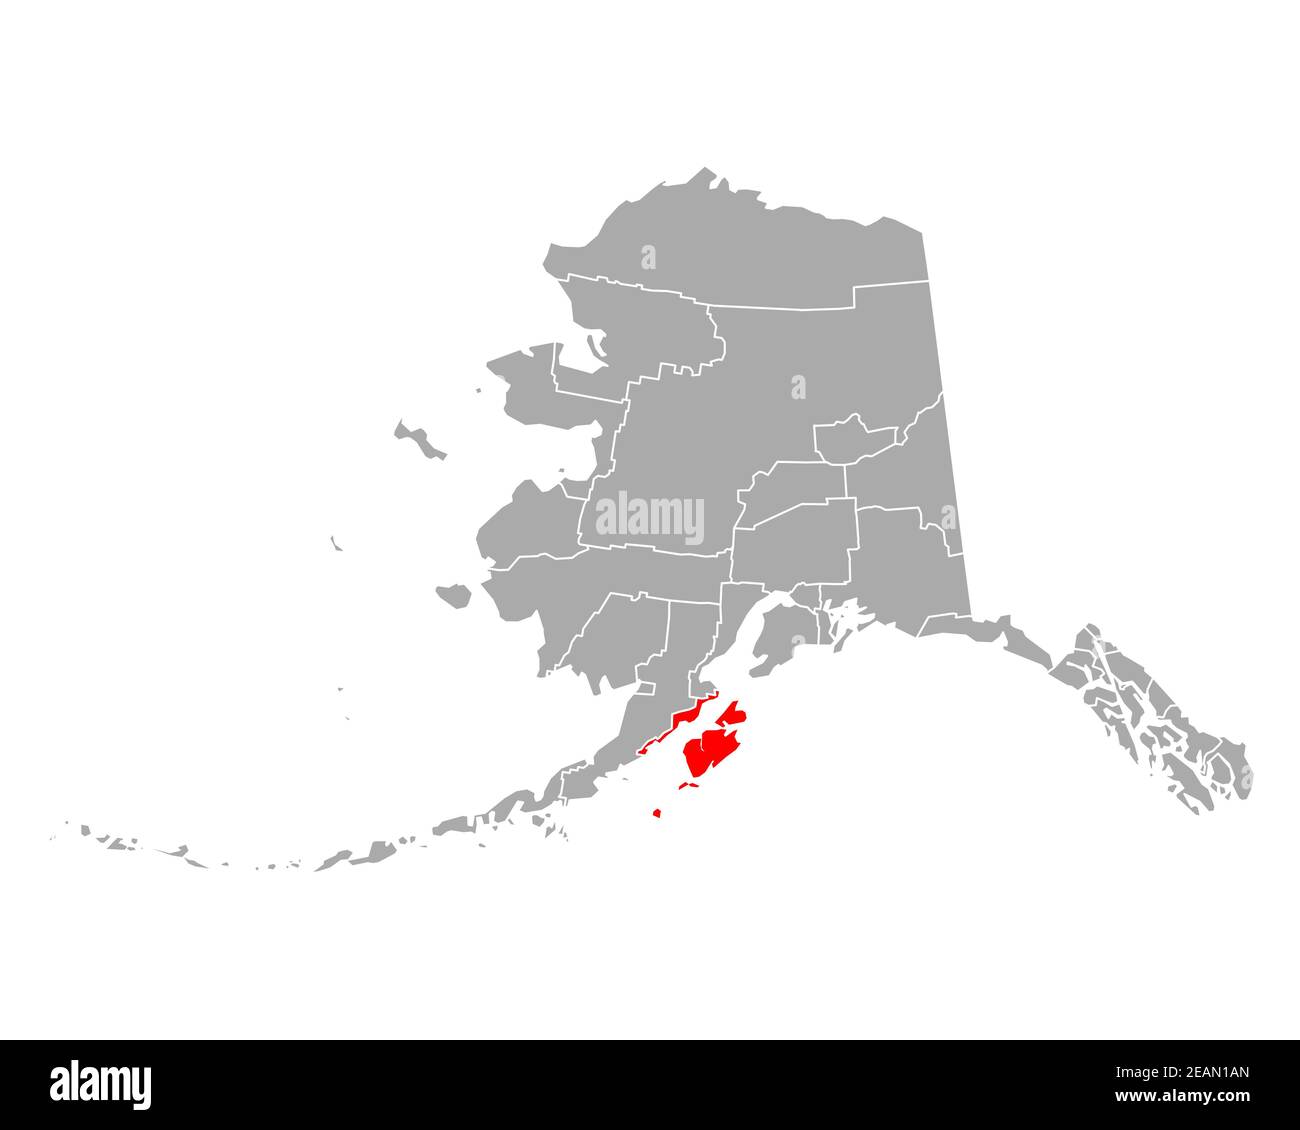 Map Of Kodiak Island In Alaska 2EAN1AN 